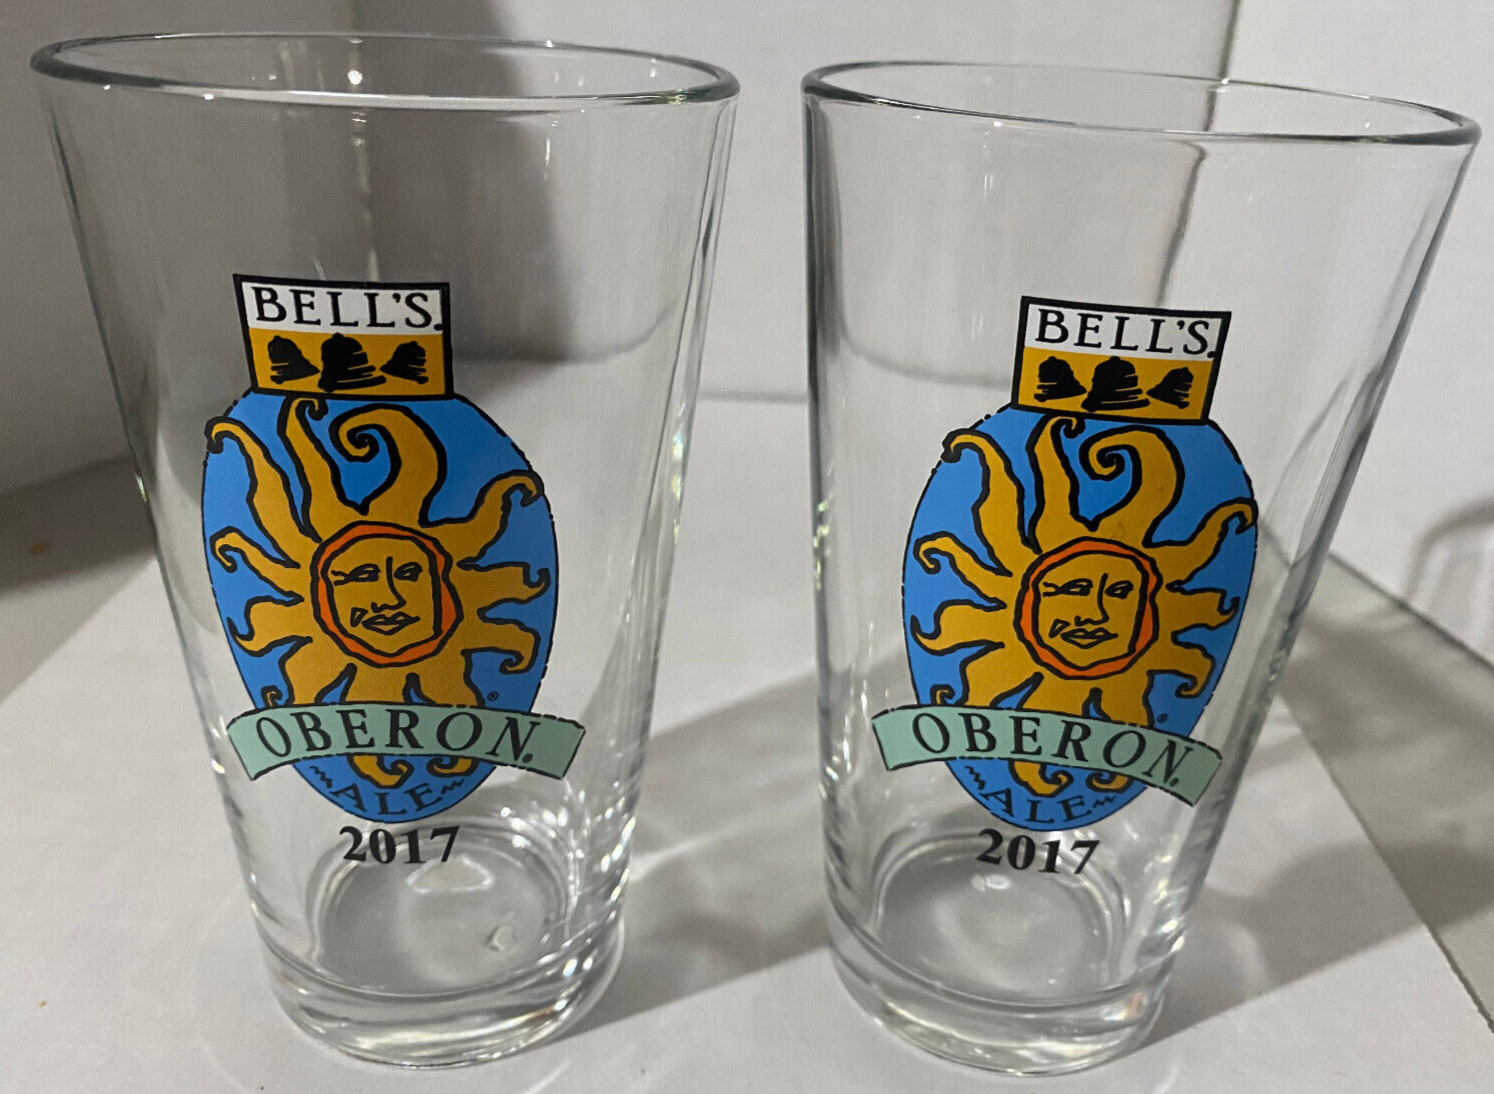 Bell's Brewery Of Kalamazoo, Michigan 2017 "oberon Ale" Pint Beer Glass